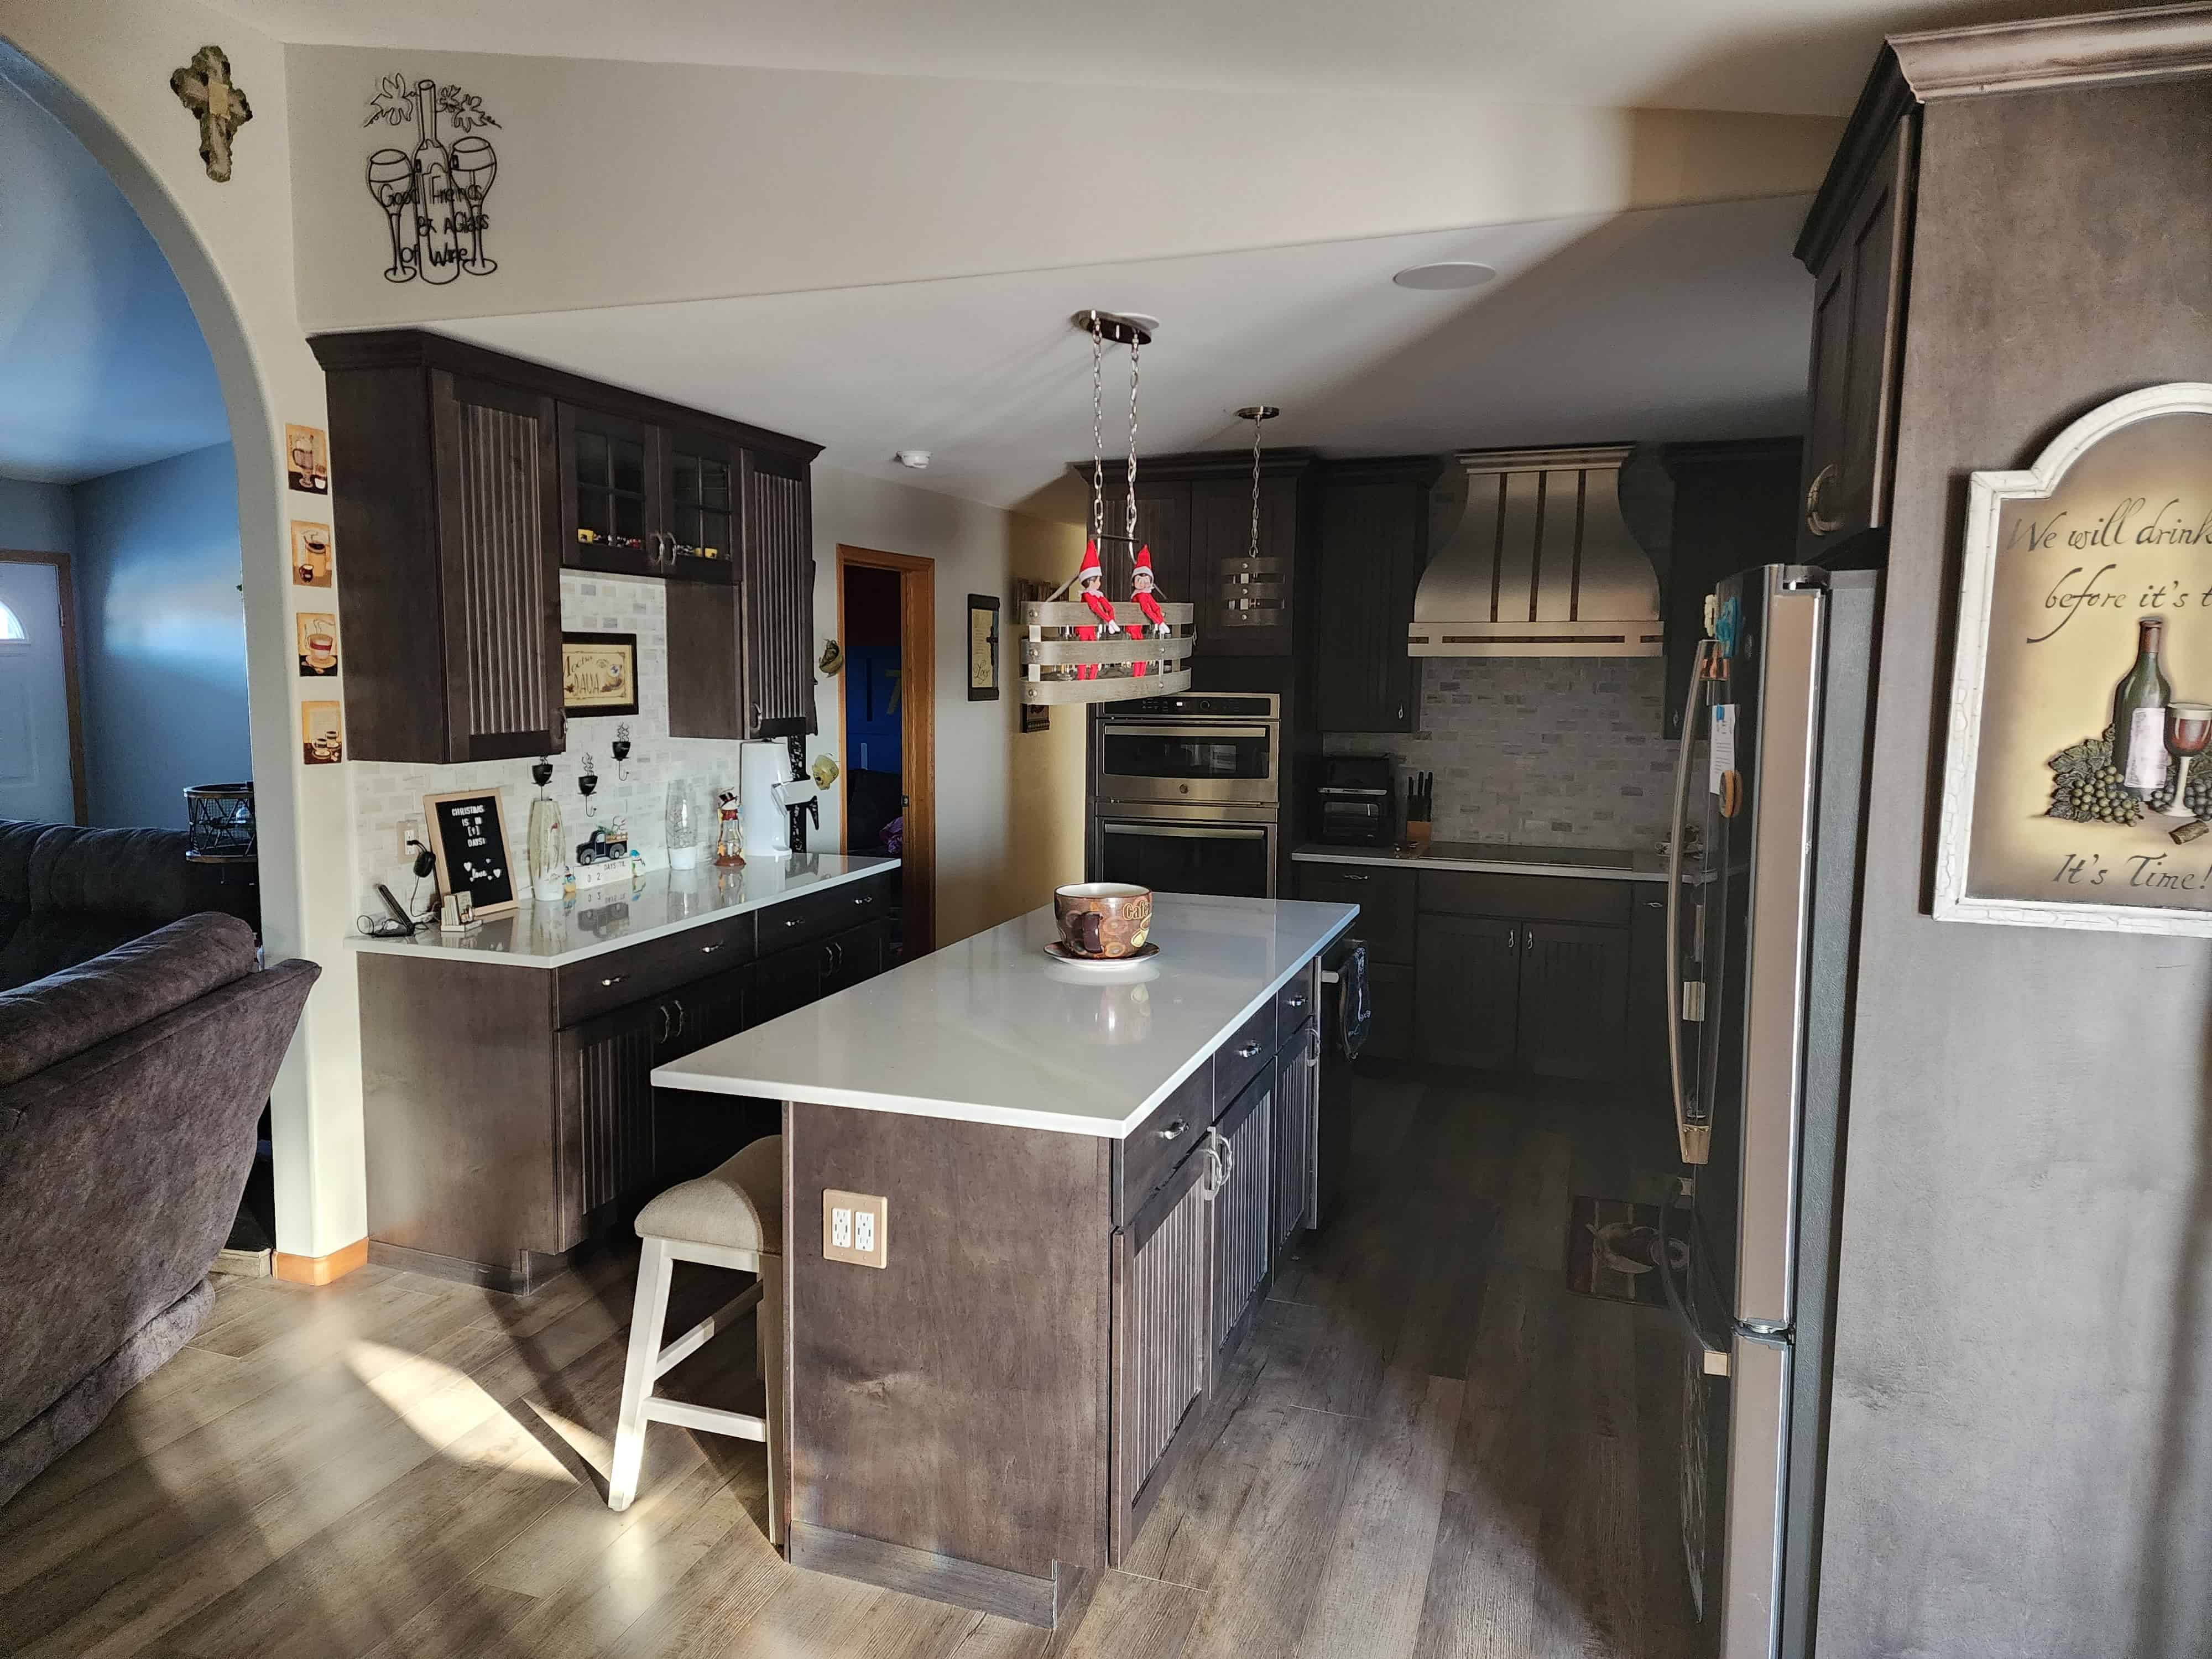 Embrace classic kitchen design idea with wood kitchen cabinets, white kitchen countertops, charming brick backsplash